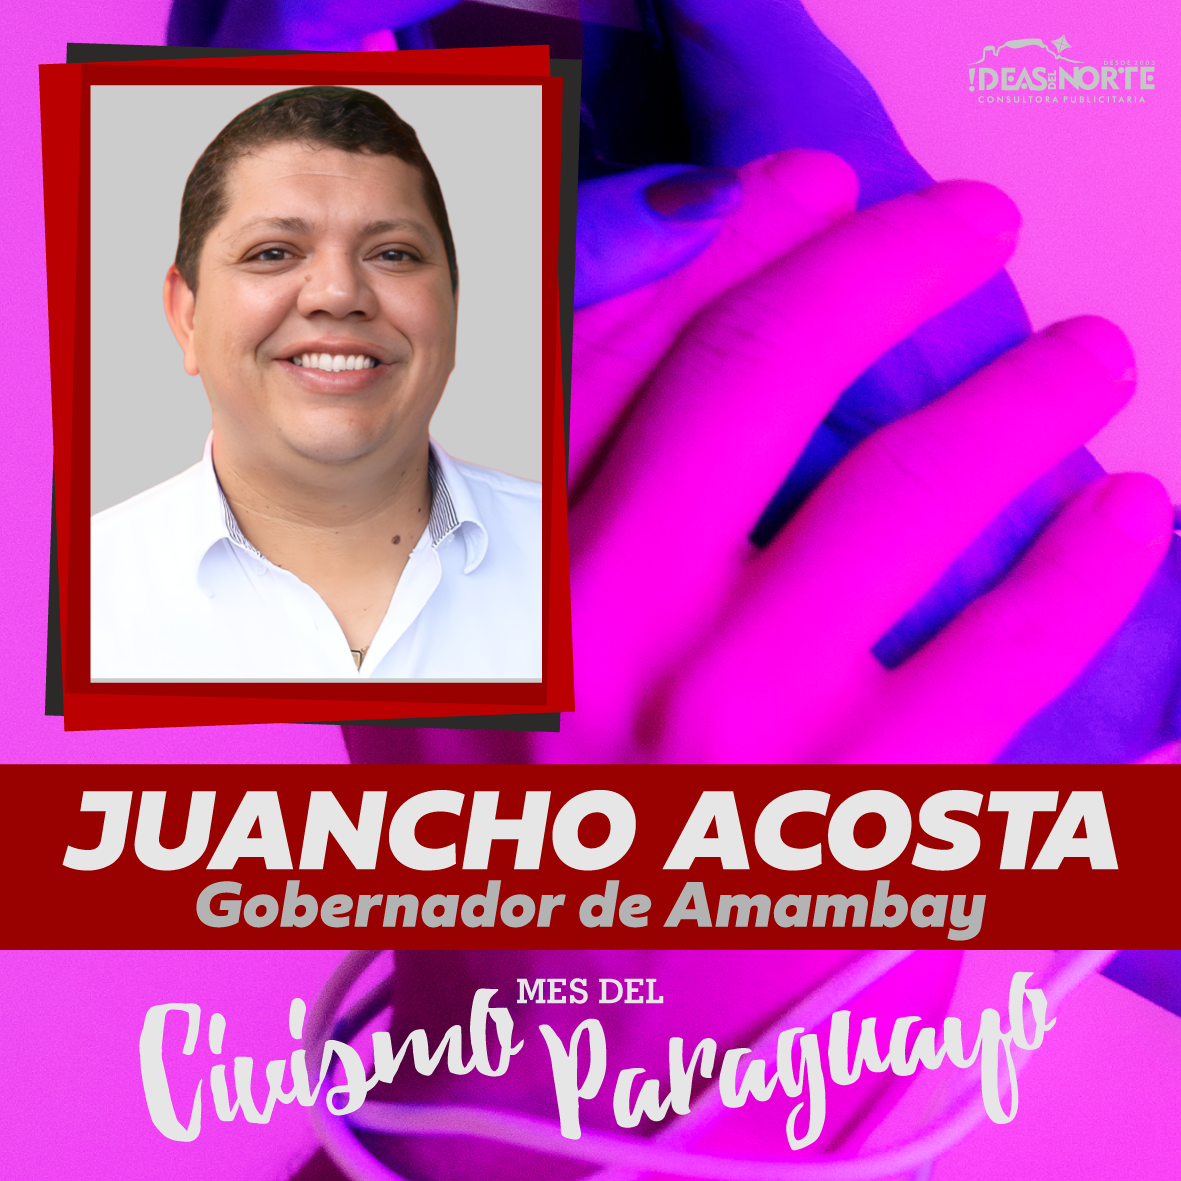 Juancho Acosta